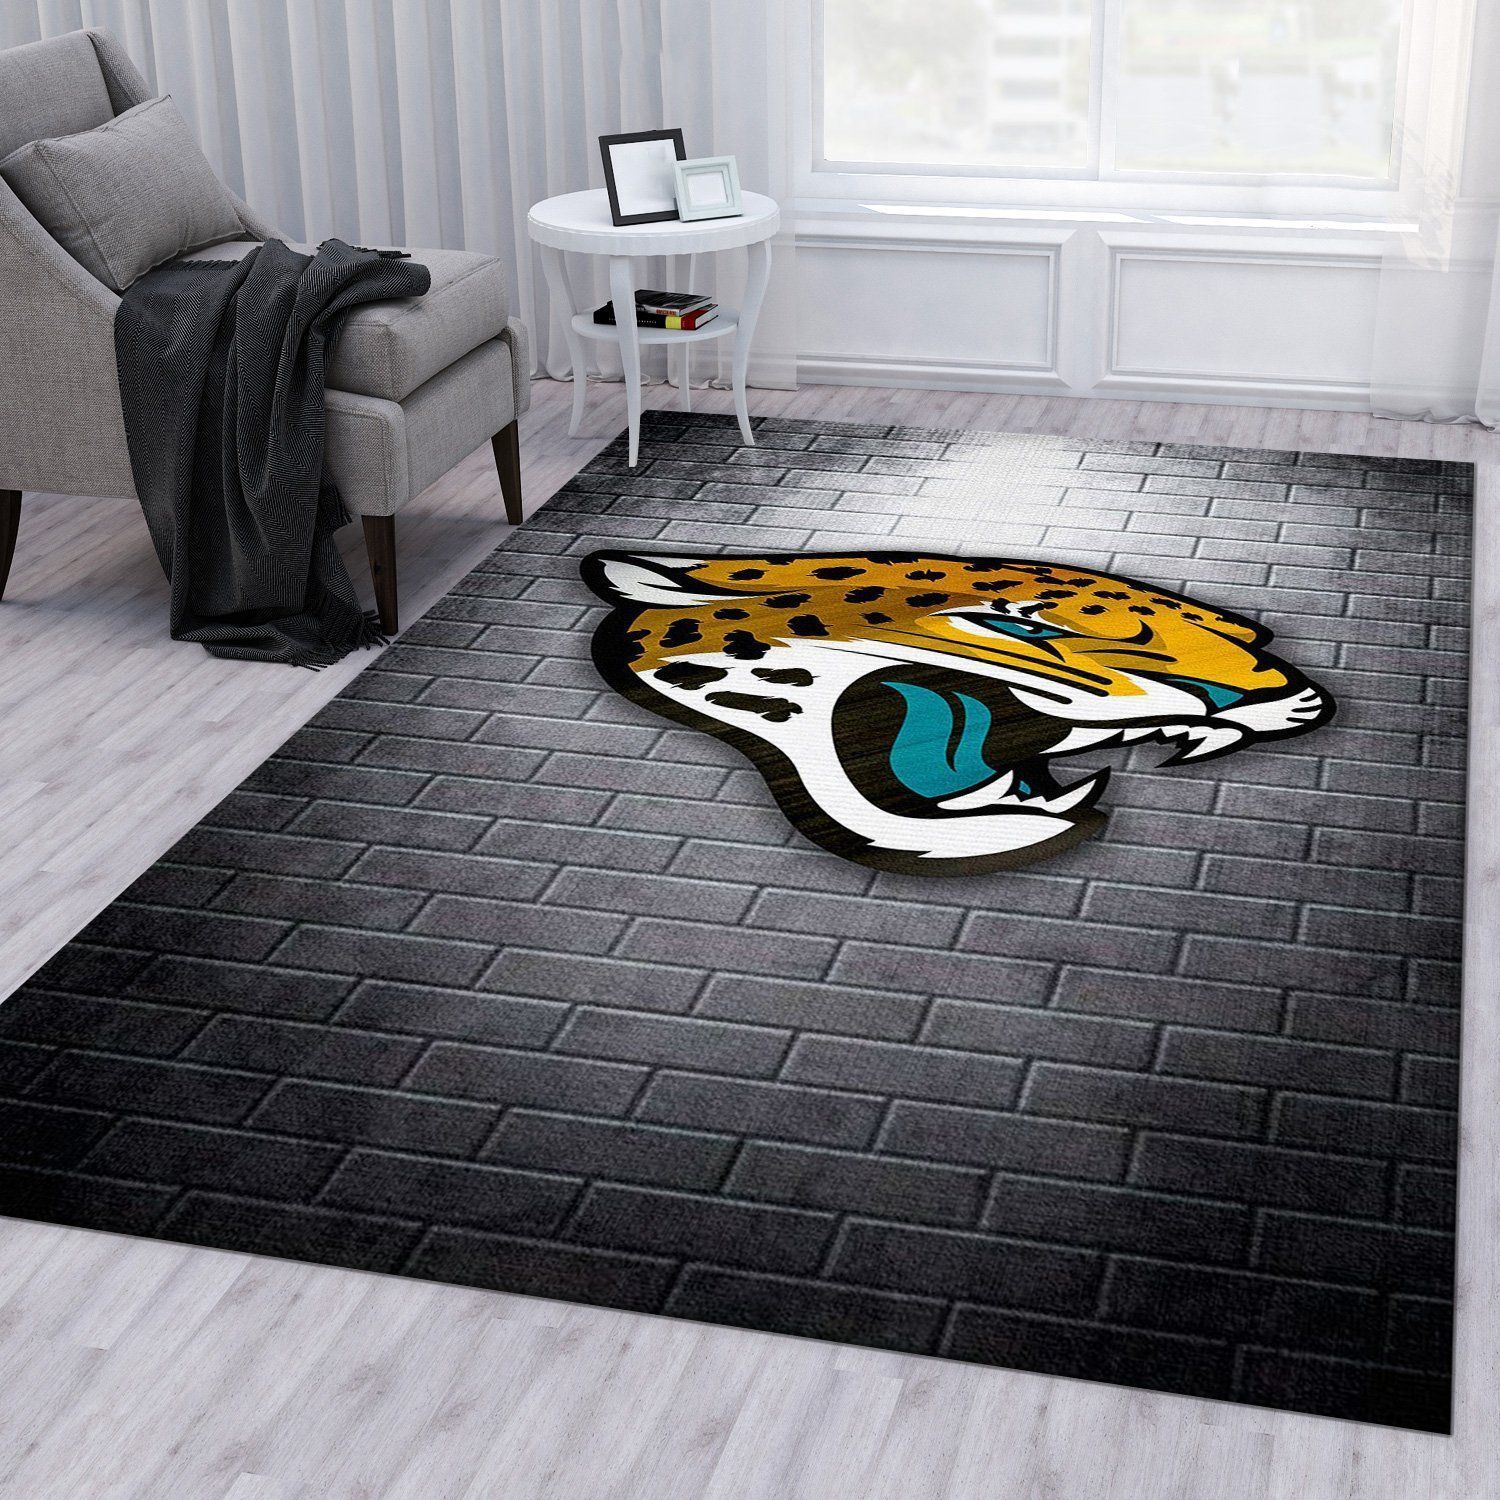 Jacksonville Jaguars Nfl Rug Living Room Rug Home Decor Floor Decor - Indoor Outdoor Rugs